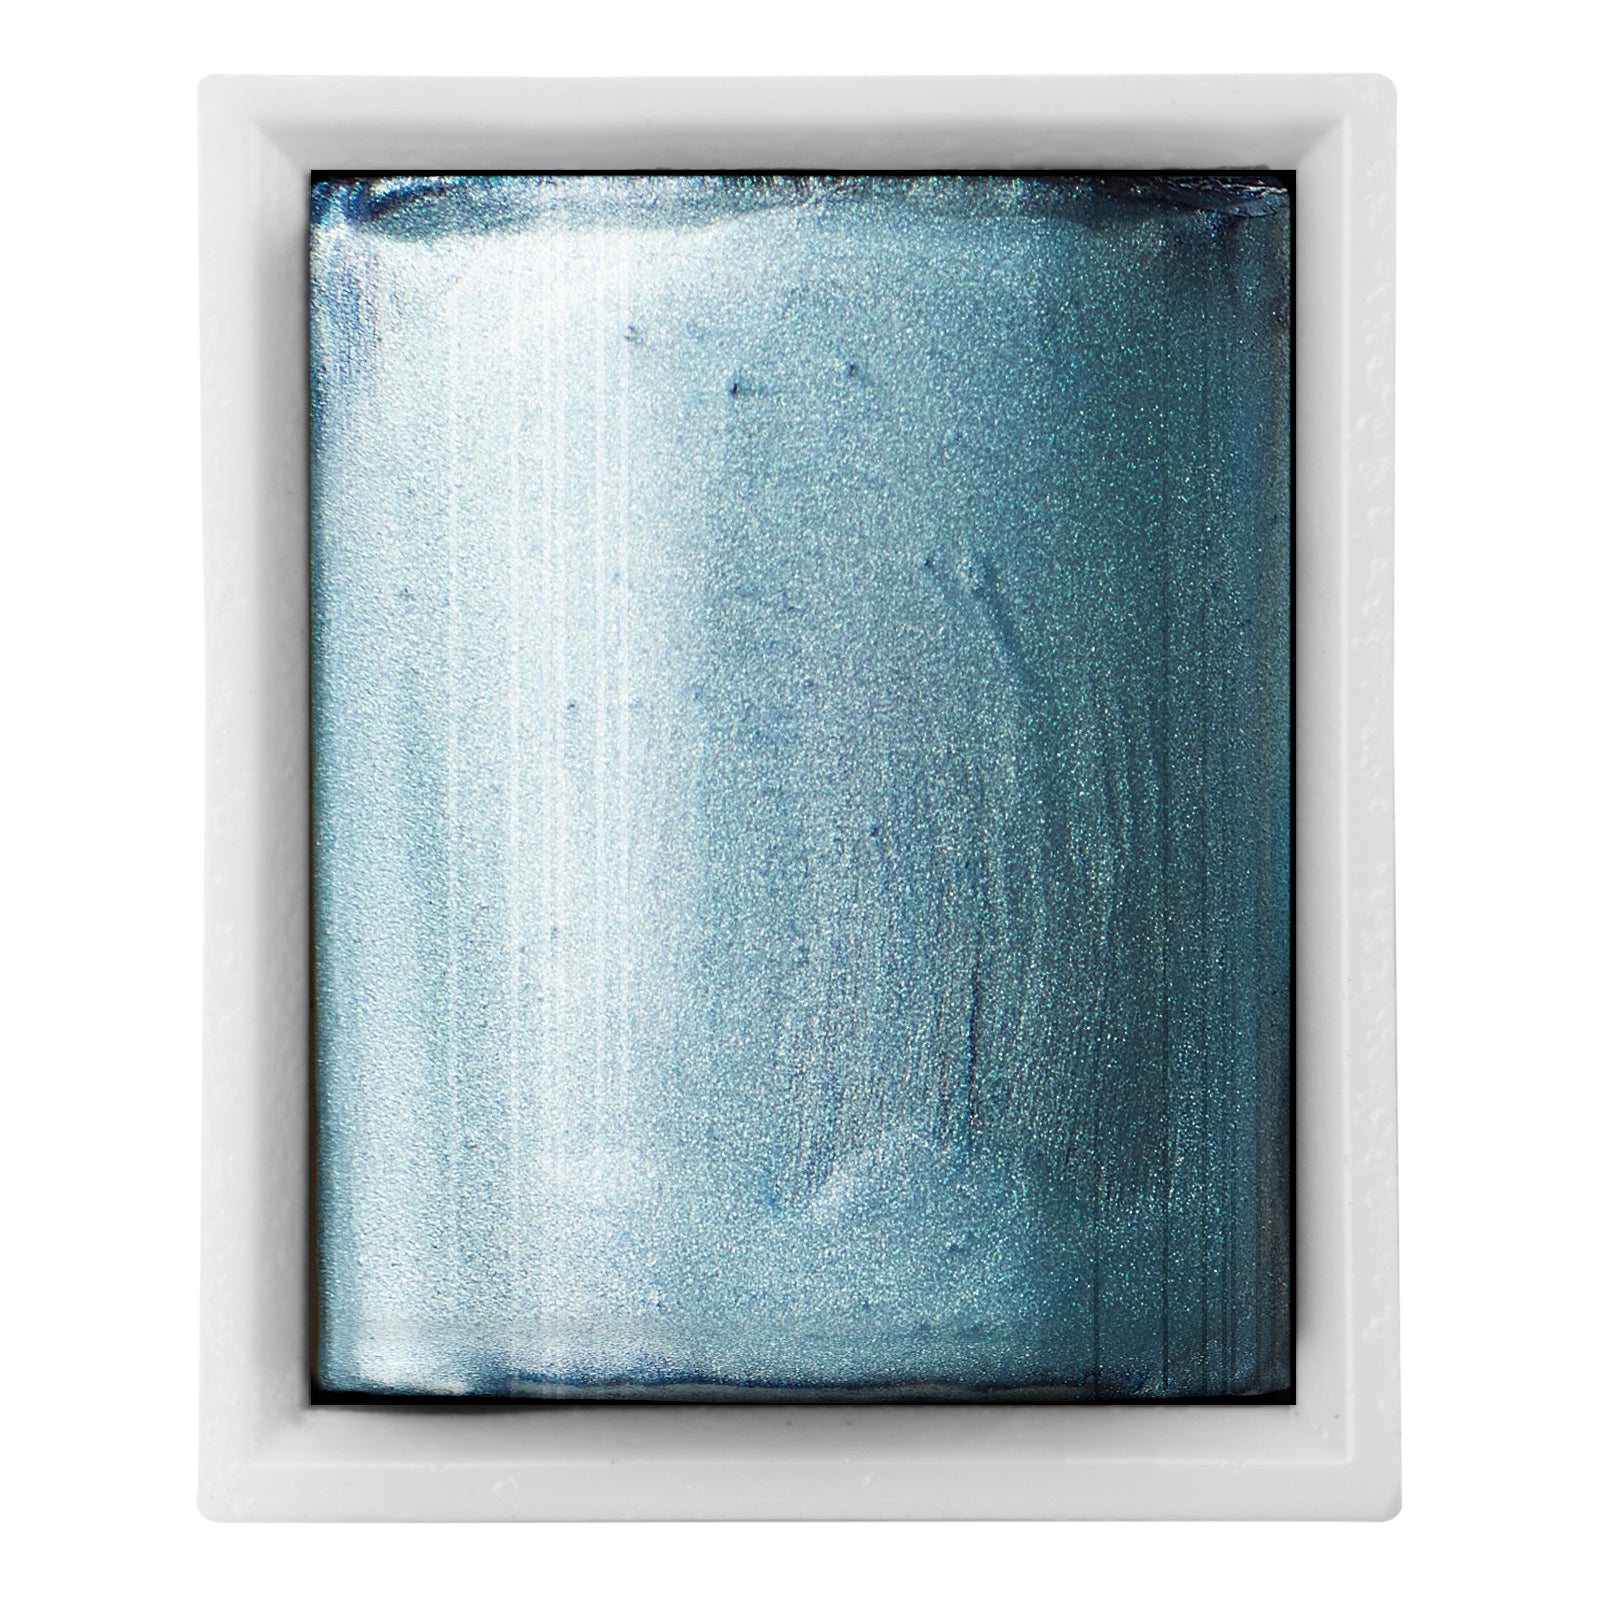 Winsor en Newton - Cotman Aquarel Half Pan - Iriserend blauw